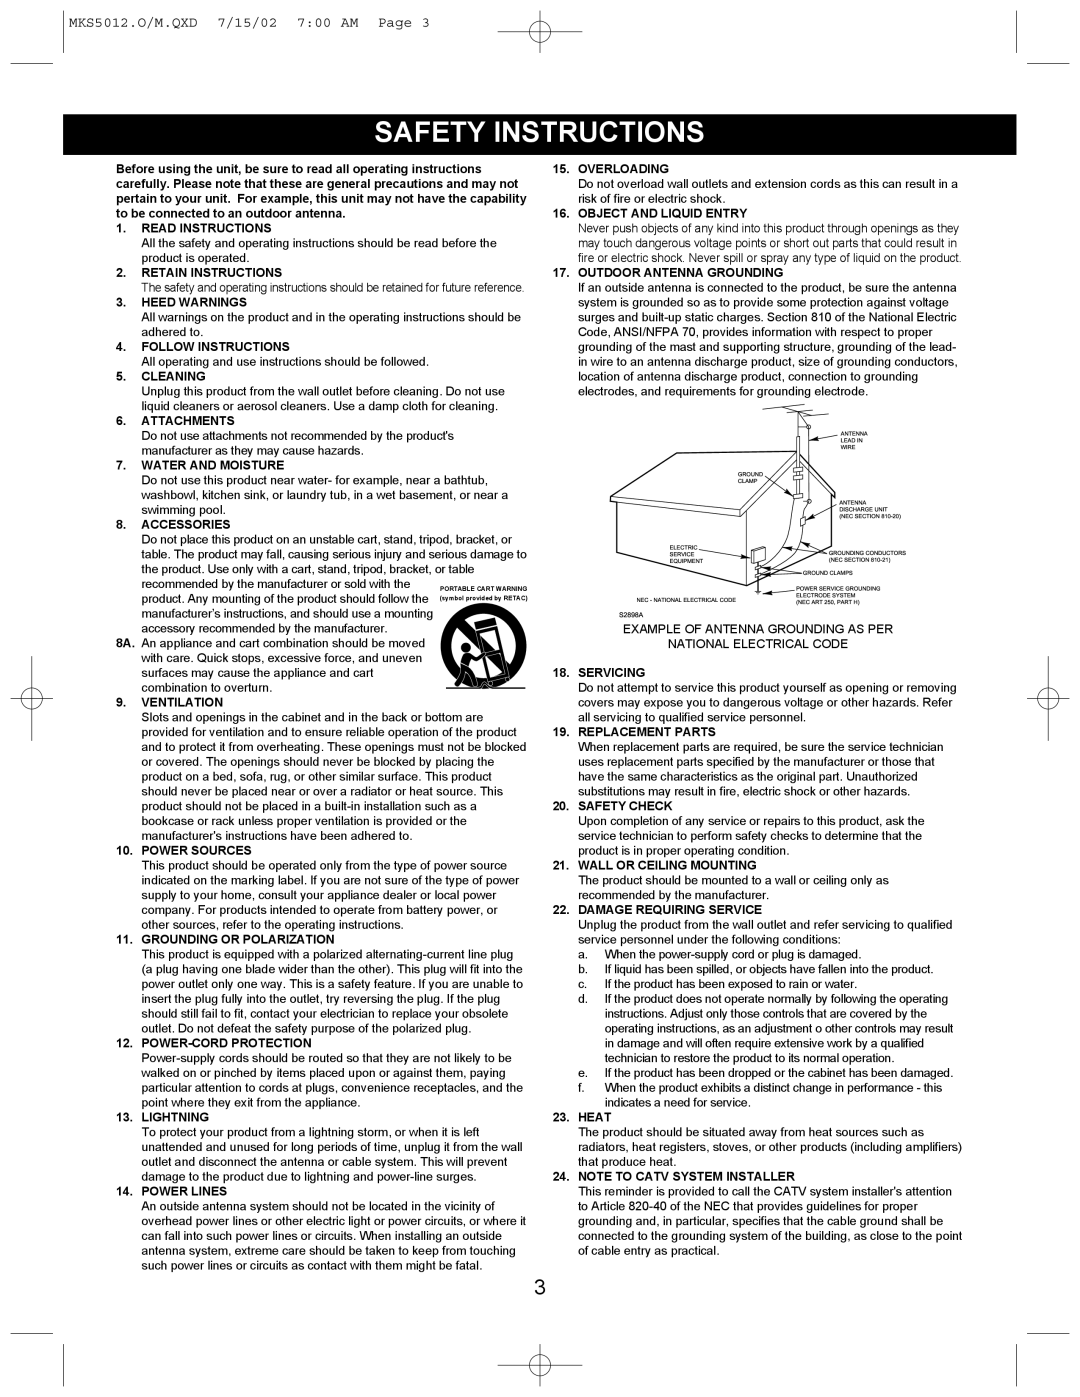 Memorex MKS5012 manual Leadin, Safety Instructions, POWERGROUNDSERVICENECCLAMPSSECTIONGROUNDING810-21, Antenna 